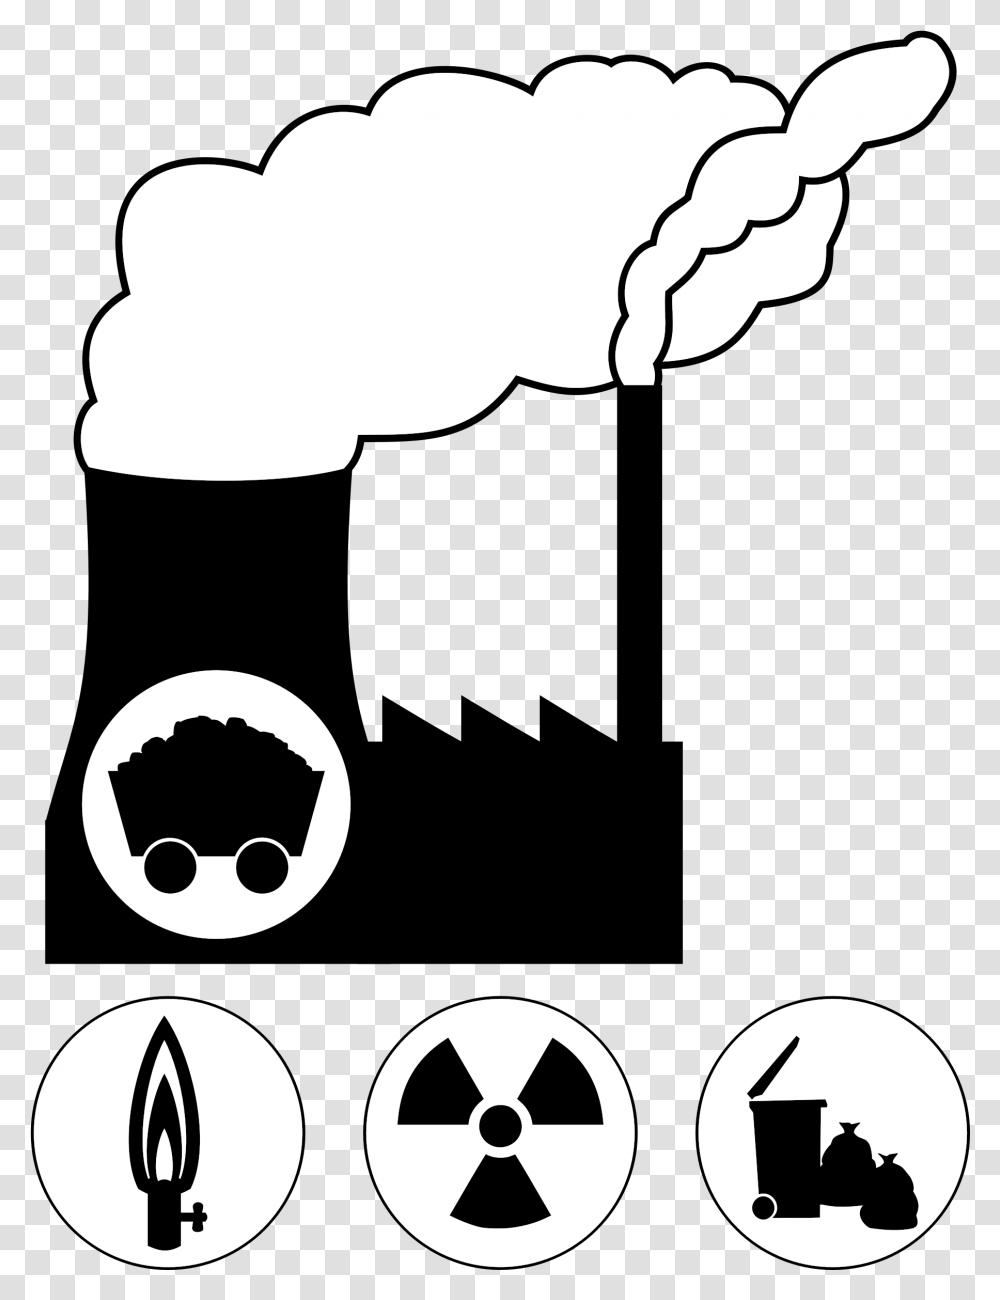 Coal Mining Symbols Clip Art Clipart Best Coal Fired Power Plant Clipart, Stencil, Text, Pillow, Cushion Transparent Png